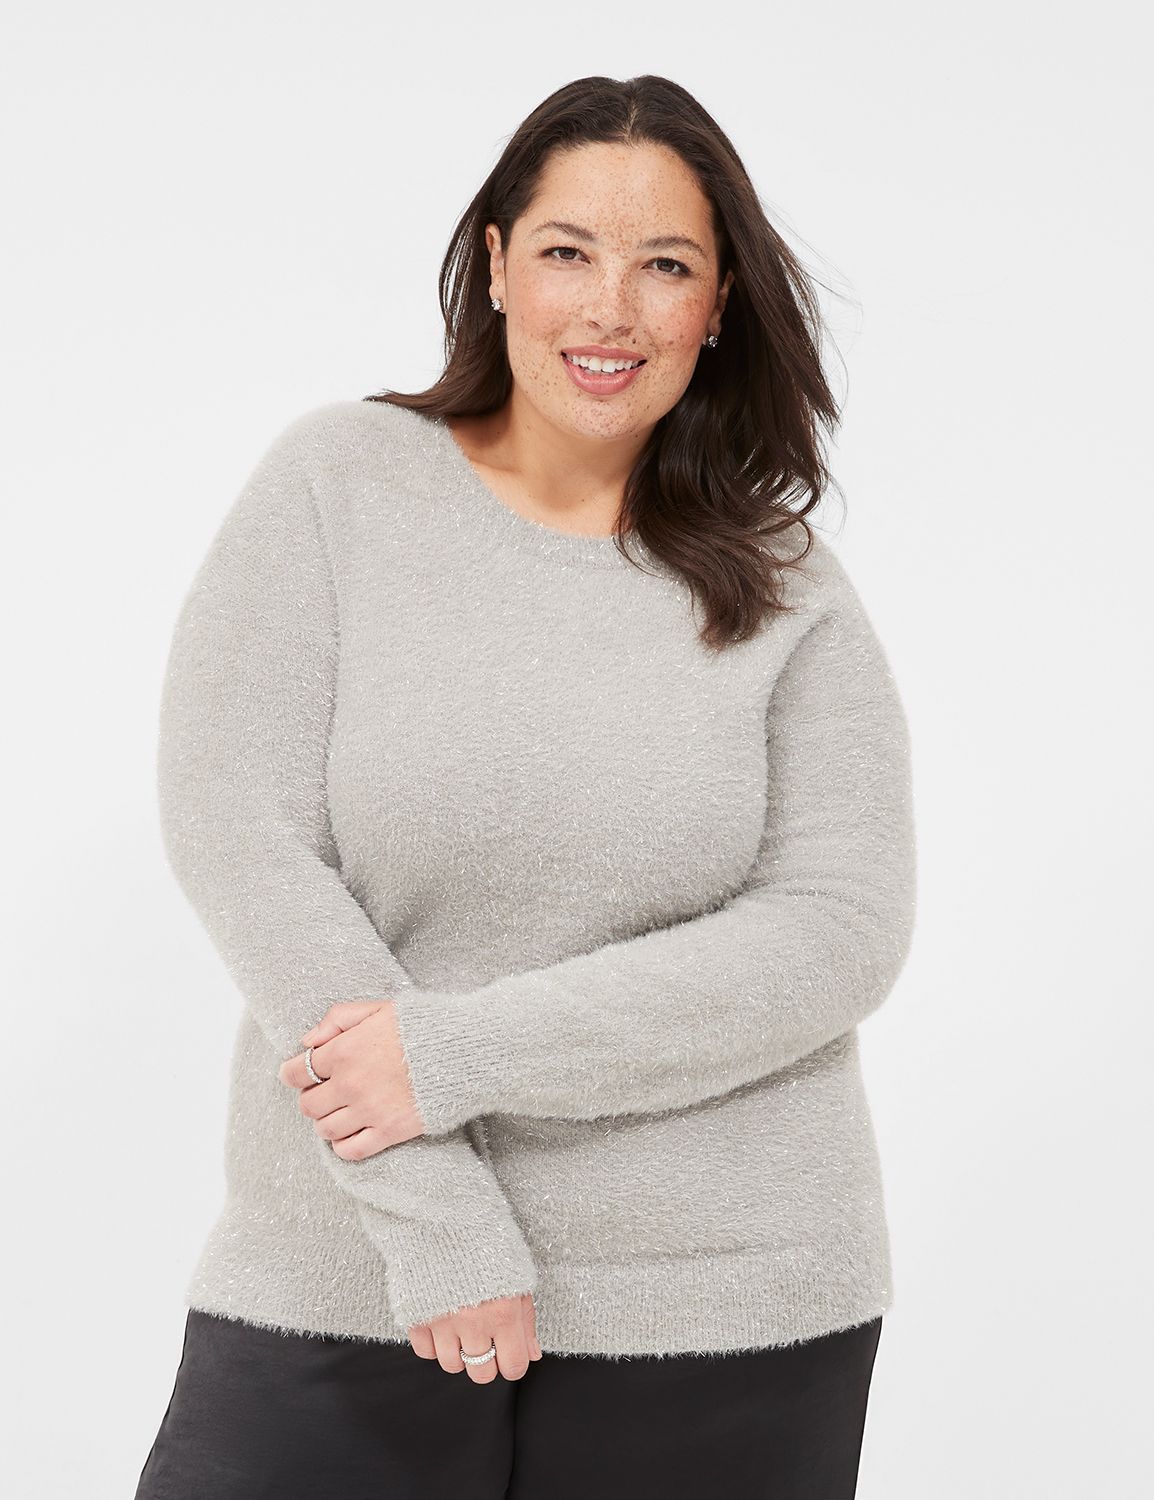 Women's Fuzzy Lush Soft Cotton Blend Sweater Tights